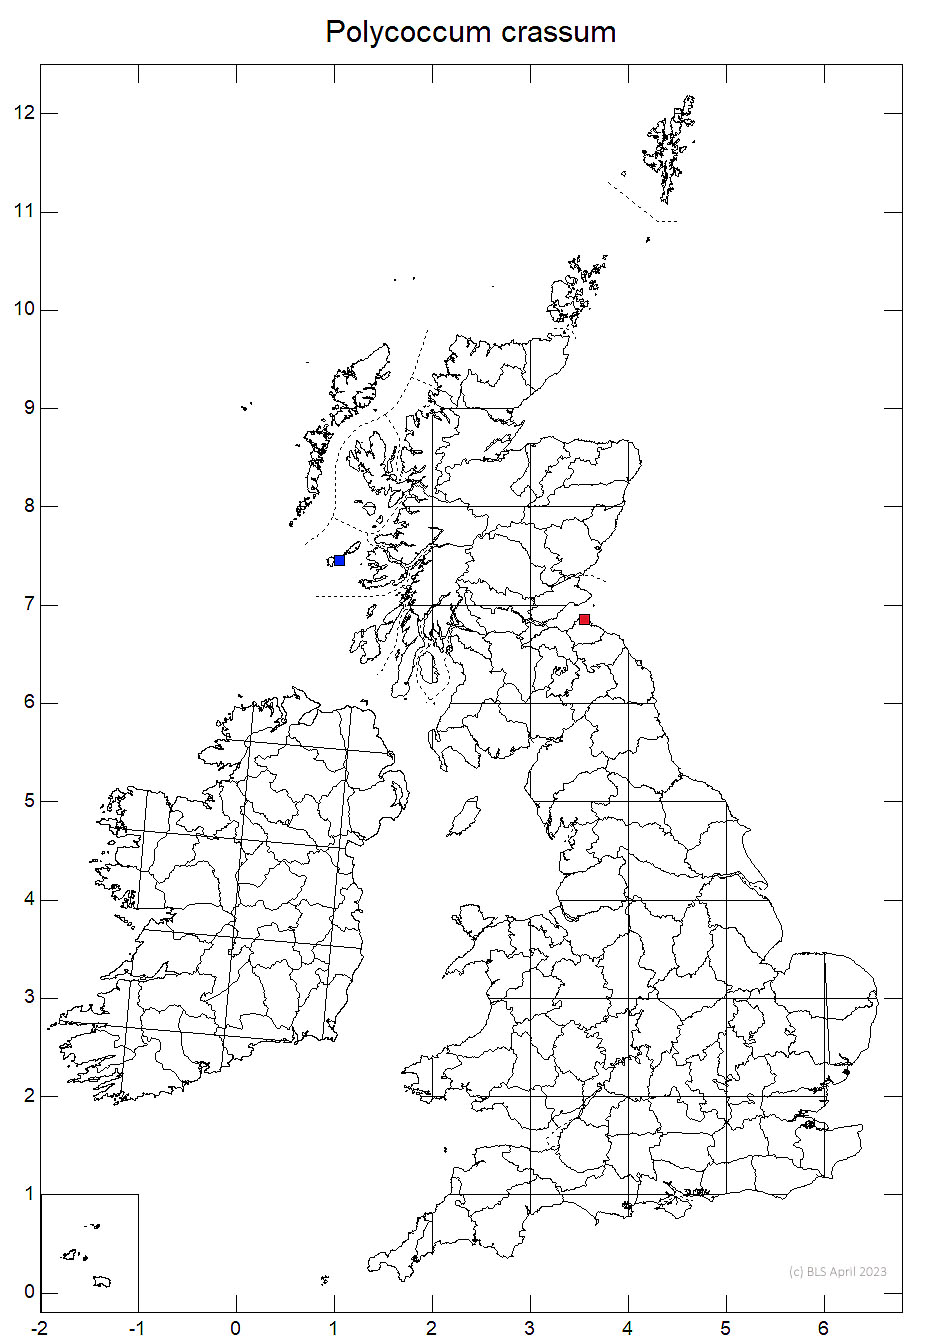 Polycoccum crassum 10km sq distribution map